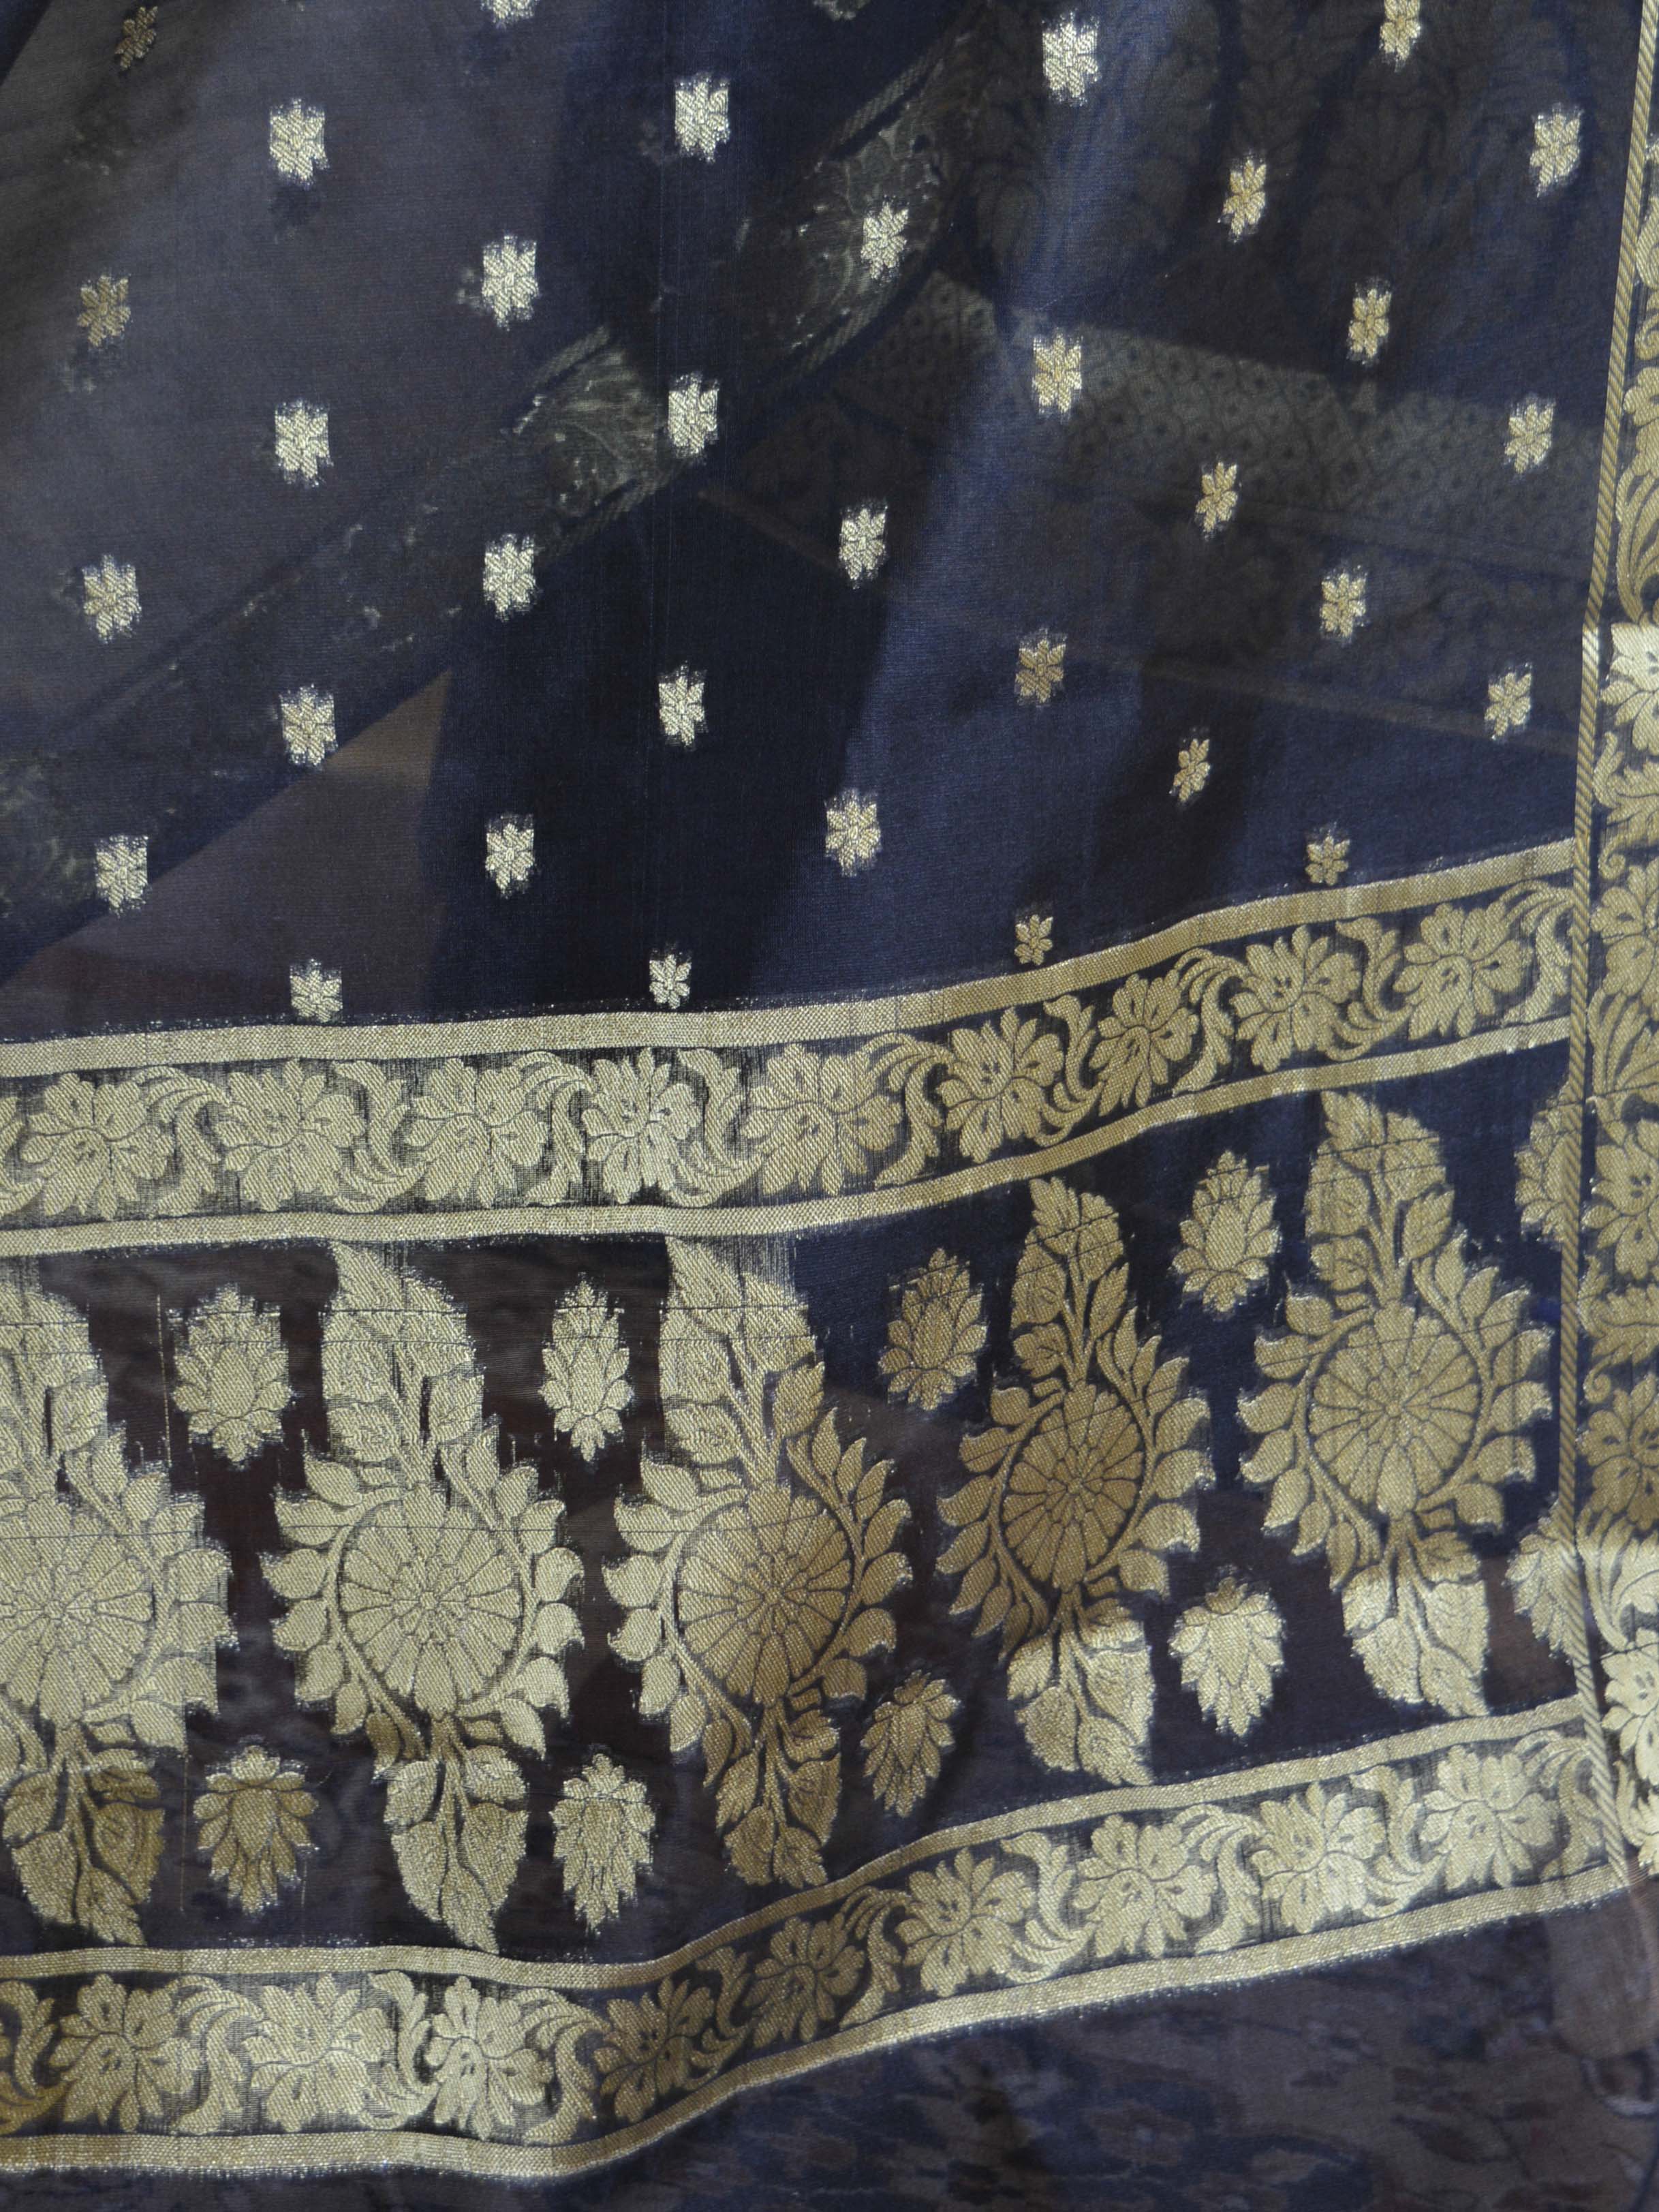 Banarasee Salwar Kameez Cotton Silk Gold Zari Jaal Woven Fabric-Black